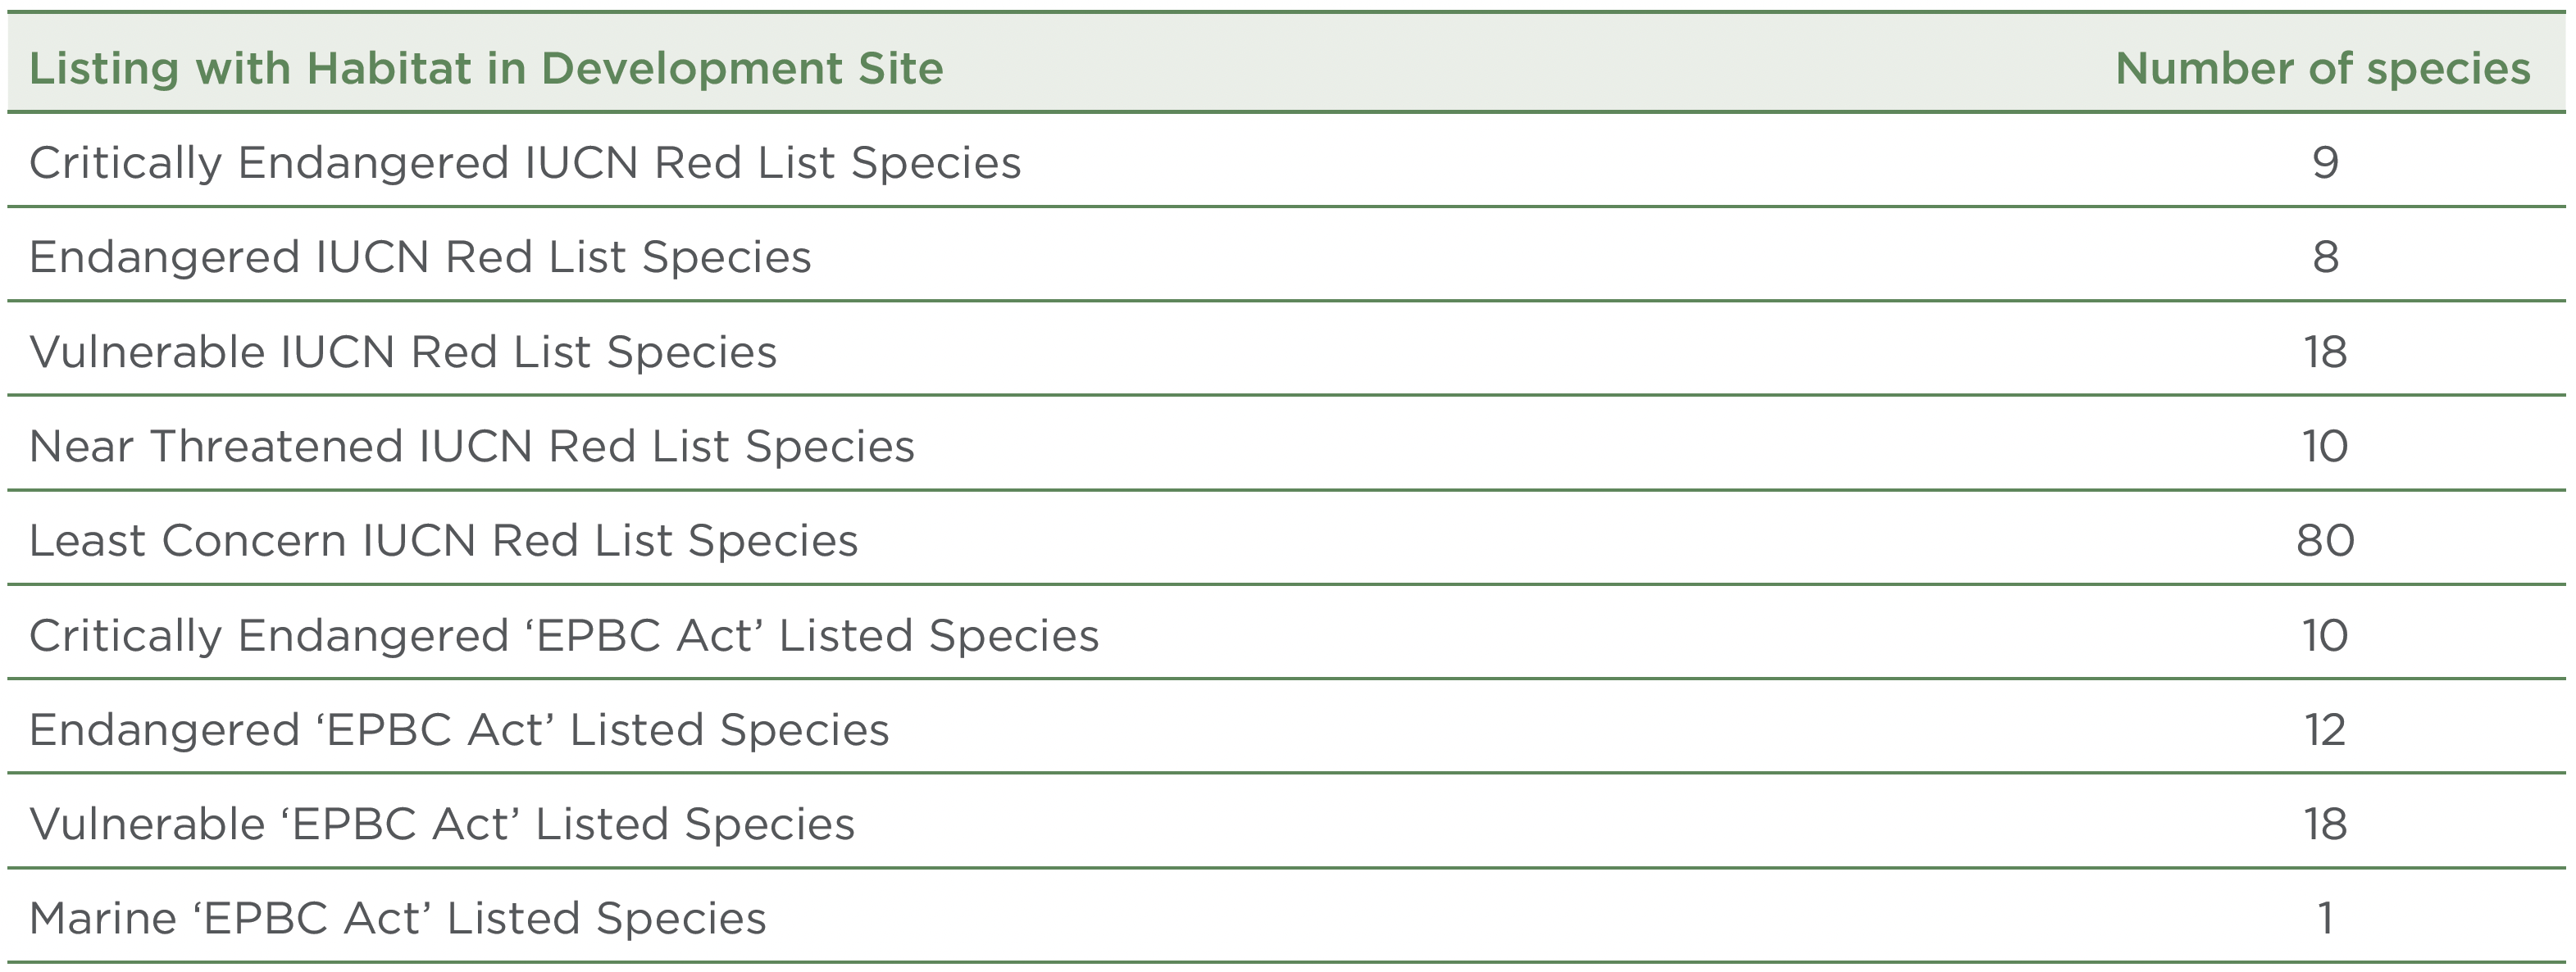 Listing with Habitat in Development Site